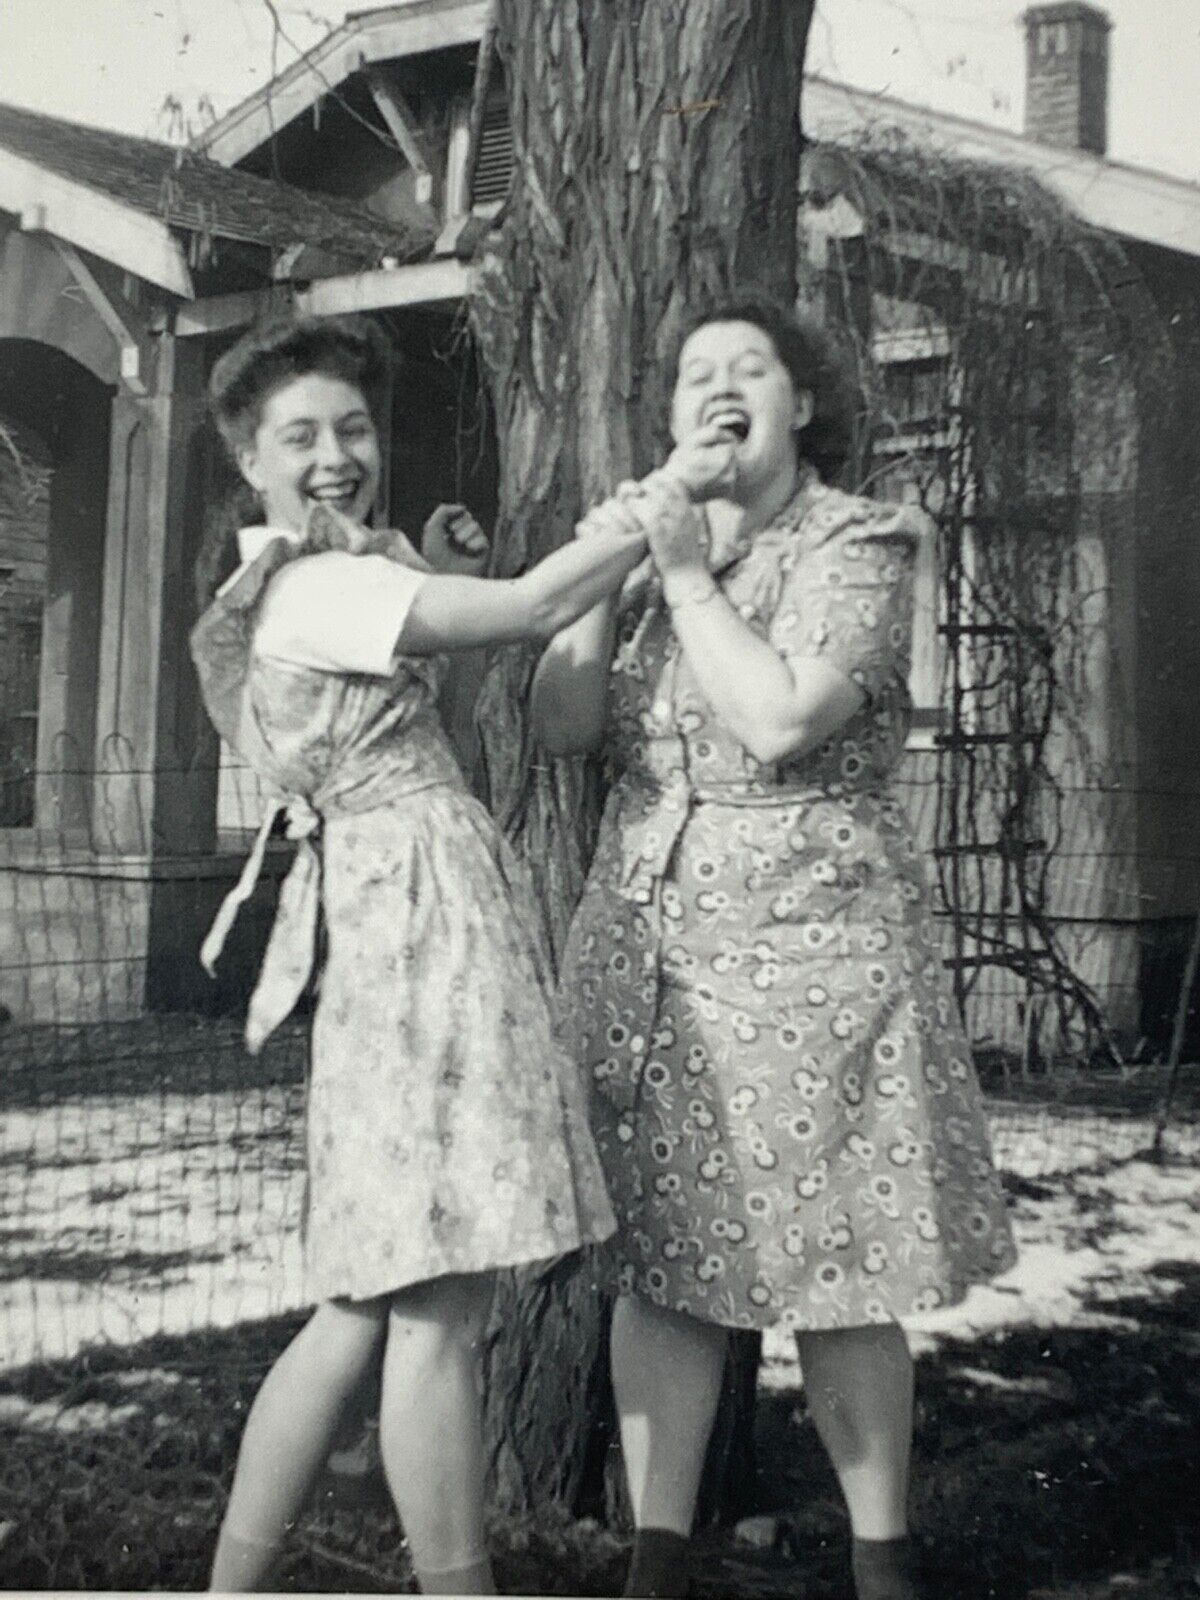 (AaF) FOUND PHOTO Photograph Snapshot Women Fighting Biting Hand Laughing 1945